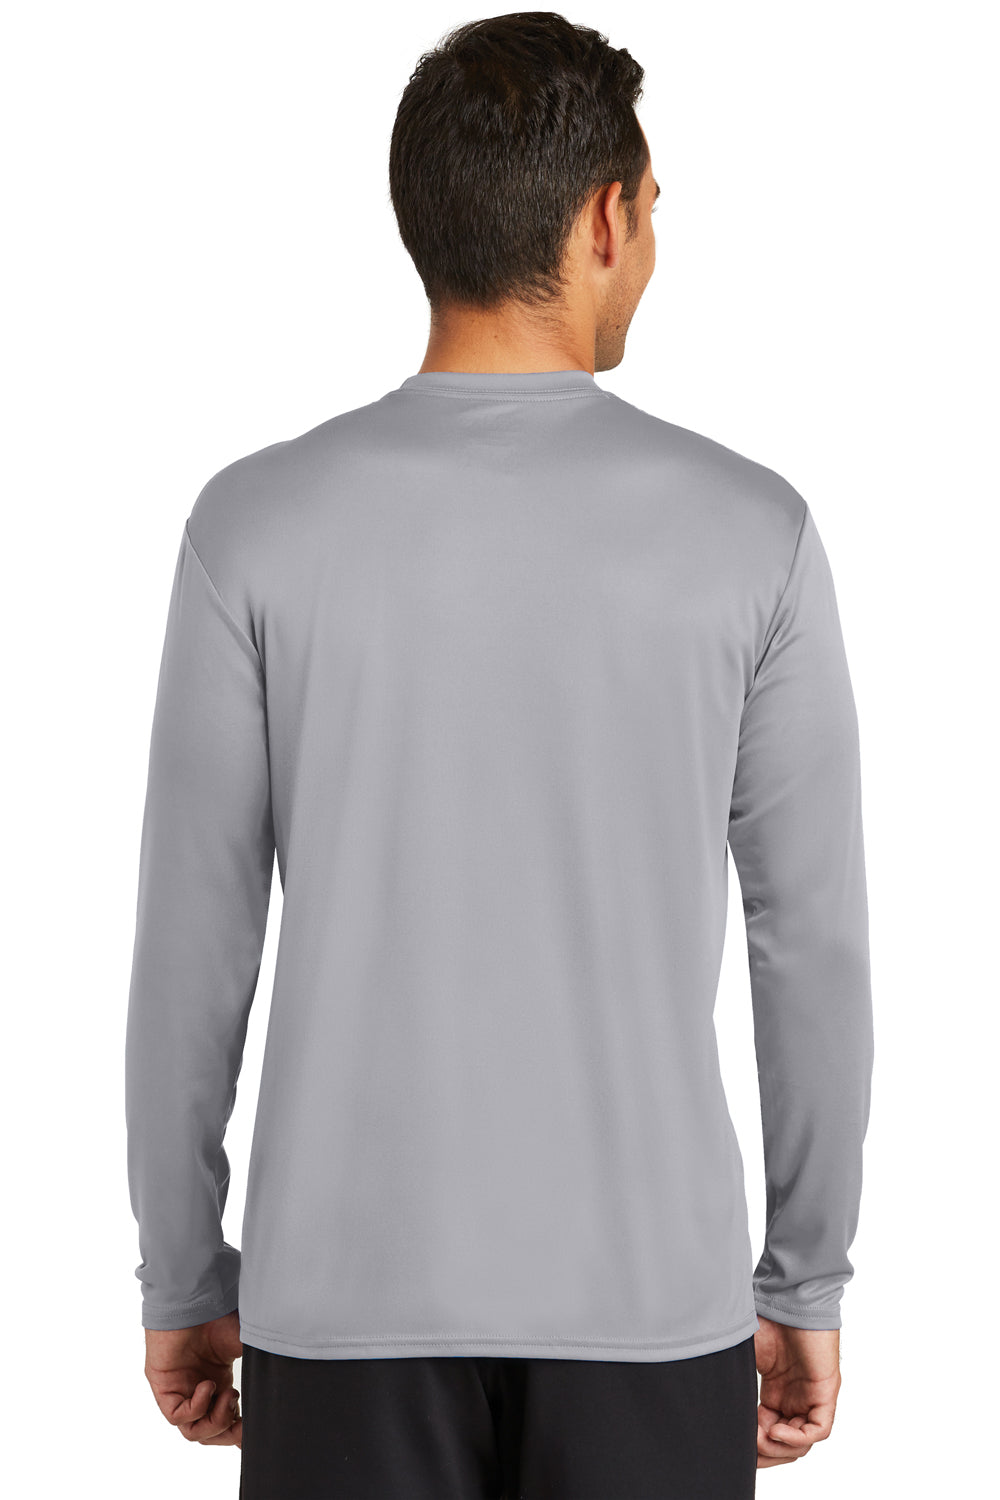 Port & Company PC380LS Mens Dry Zone Performance Moisture Wicking Long Sleeve Crewneck T-Shirt Silver Grey Back